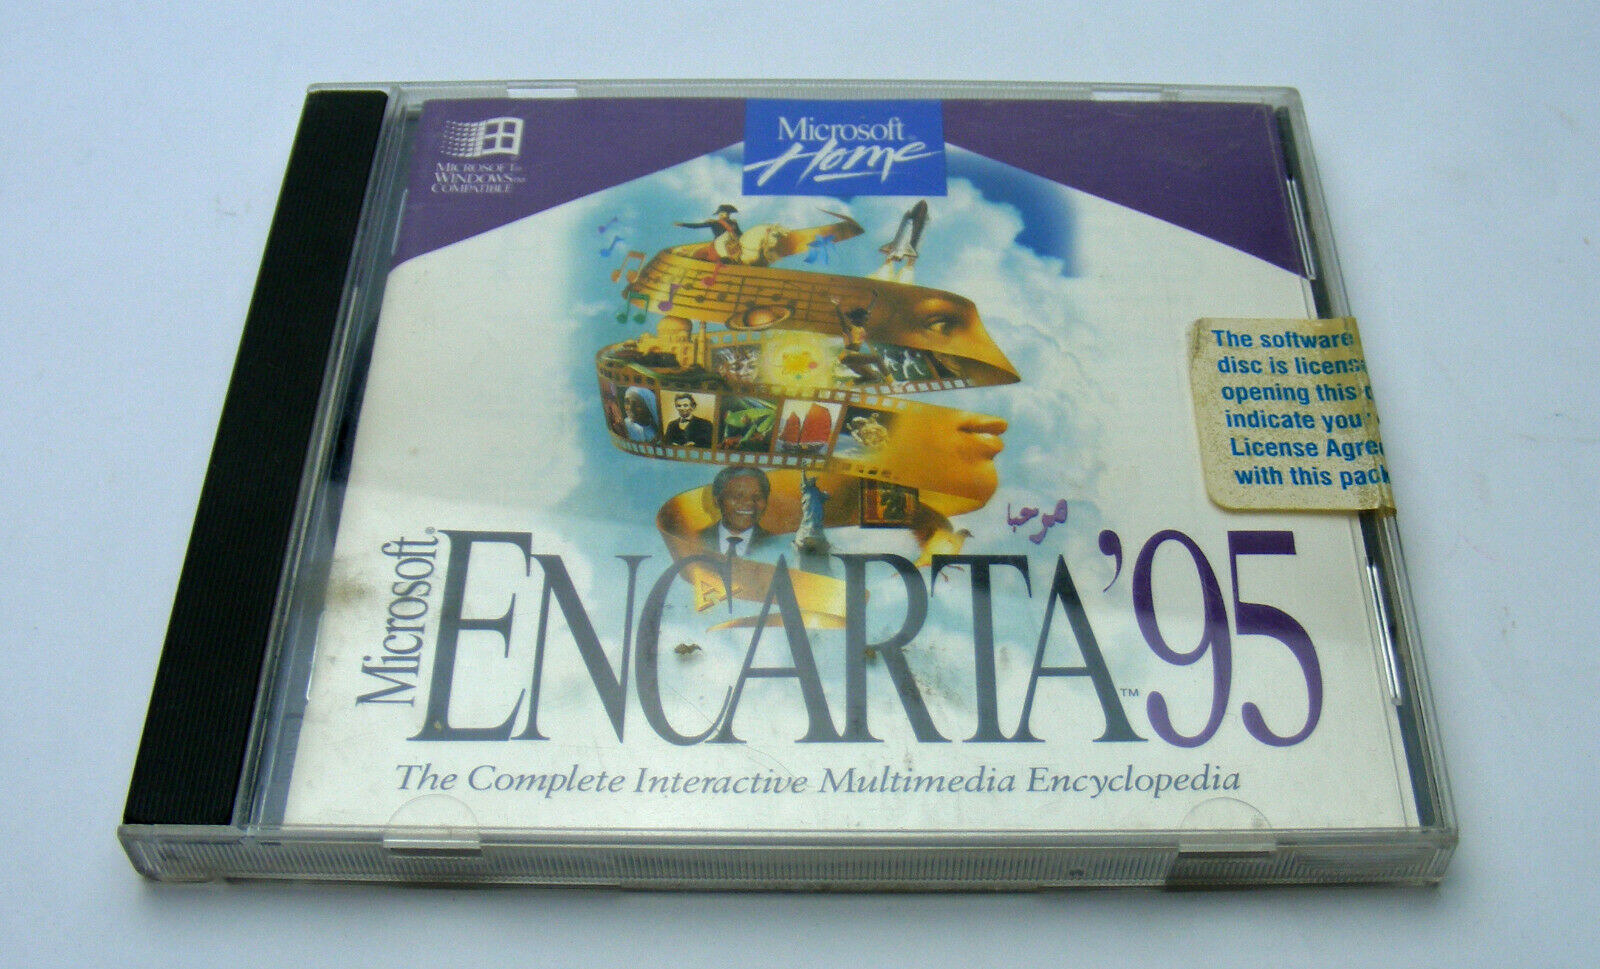 CD of Encarta 95